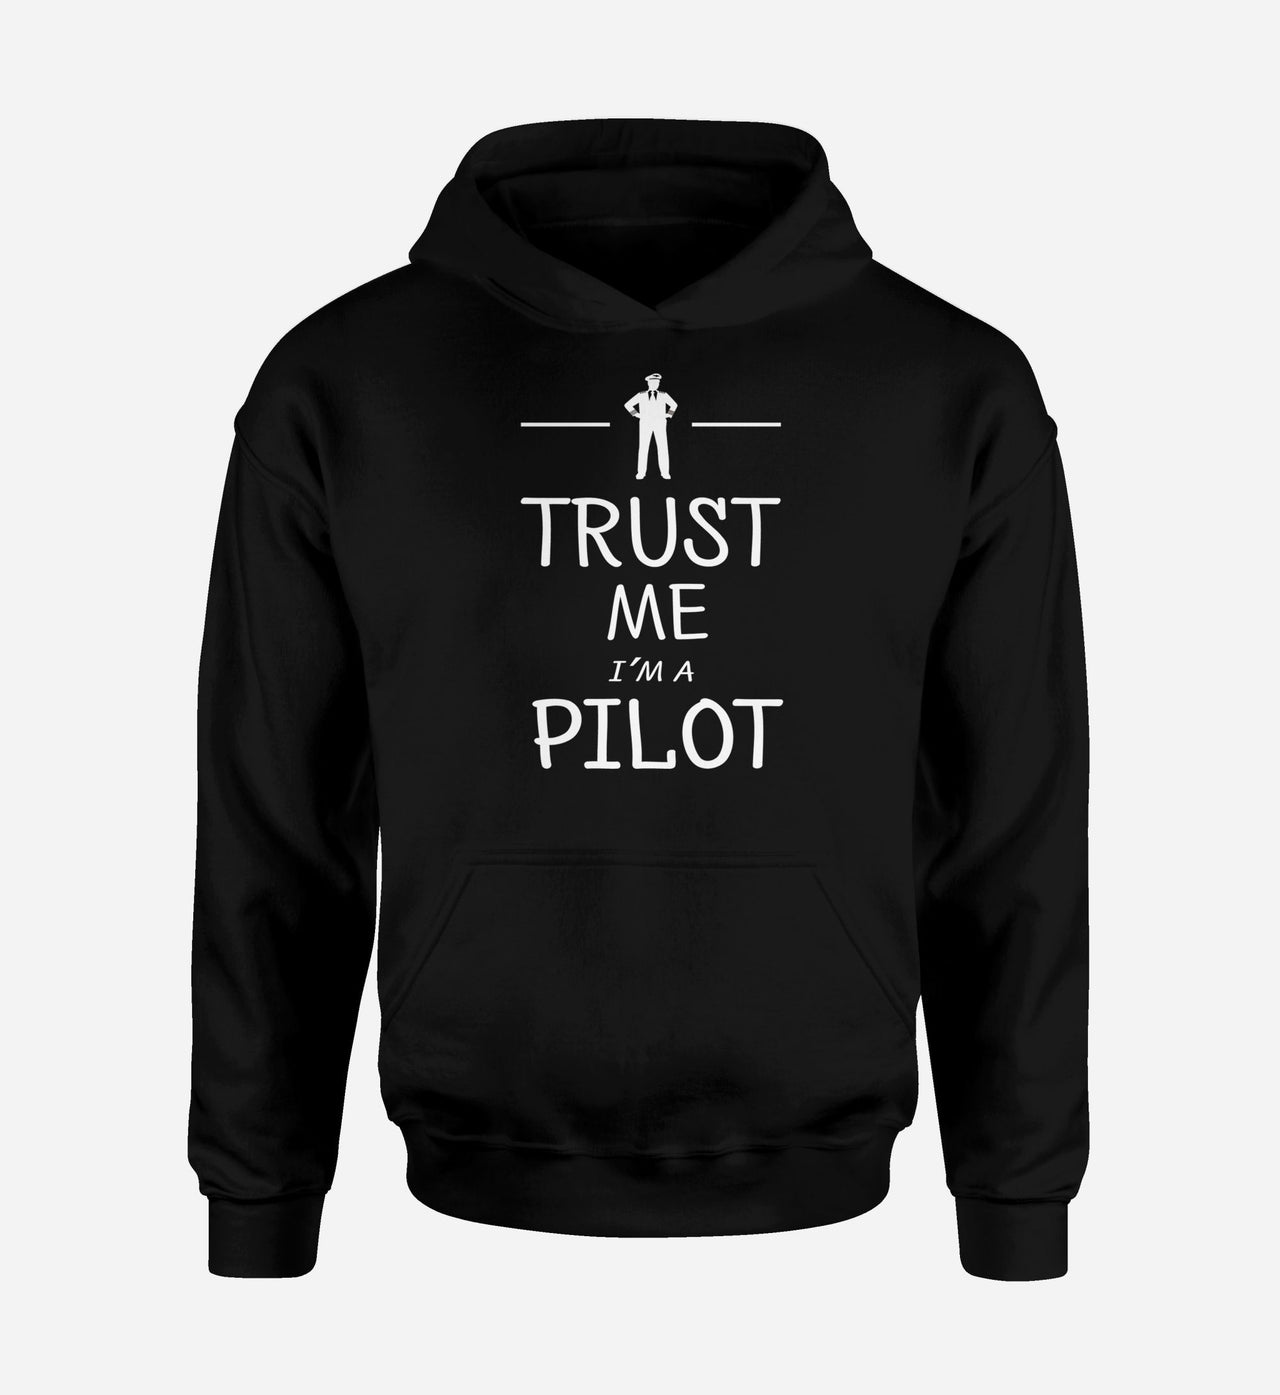 Trust Me I'm a Pilot Designed Hoodies